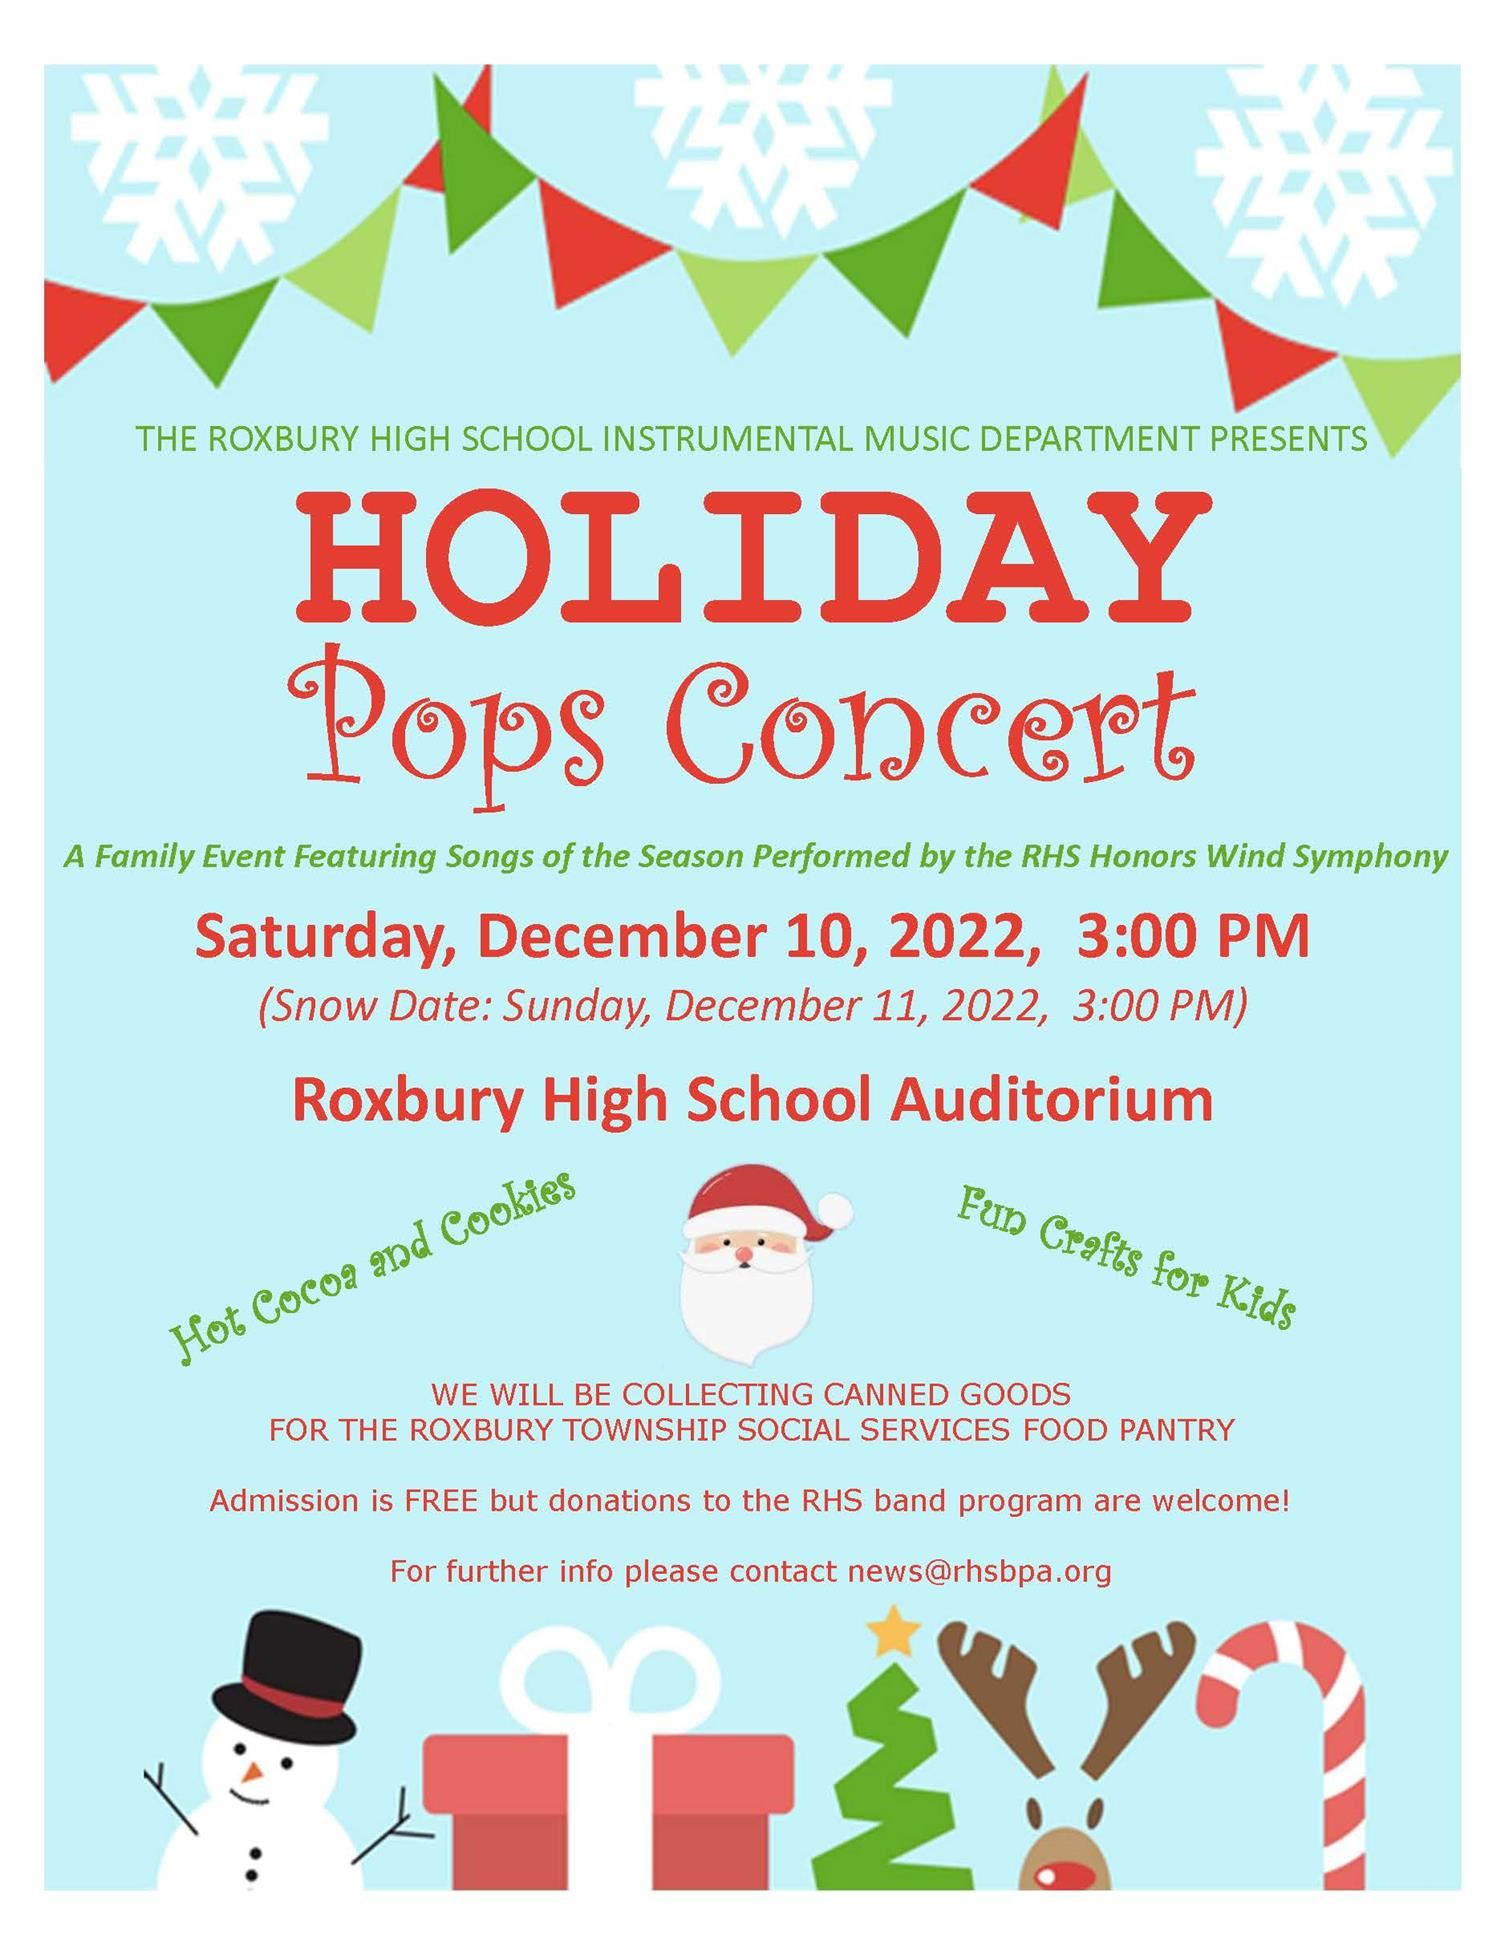  Holiday Pops Concert Flyer for Dec 10th